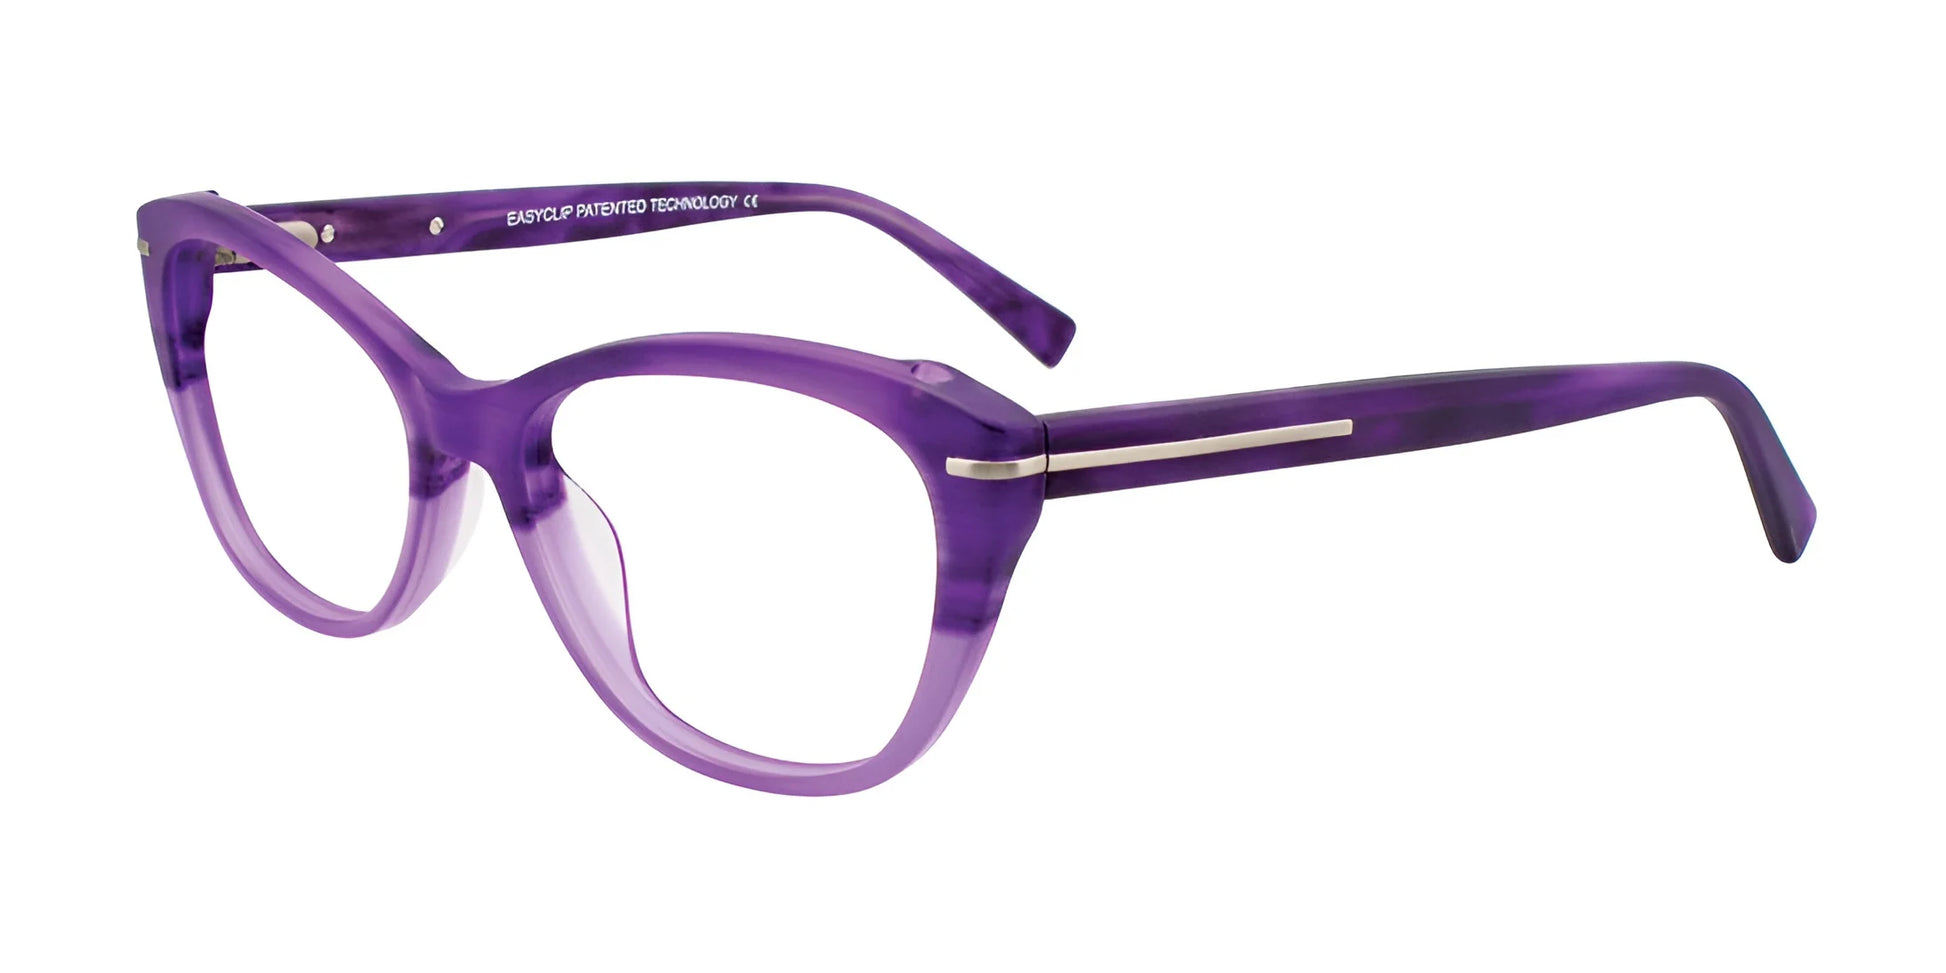 EasyClip EC425 Eyeglasses with Clip-on Sunglasses Purple